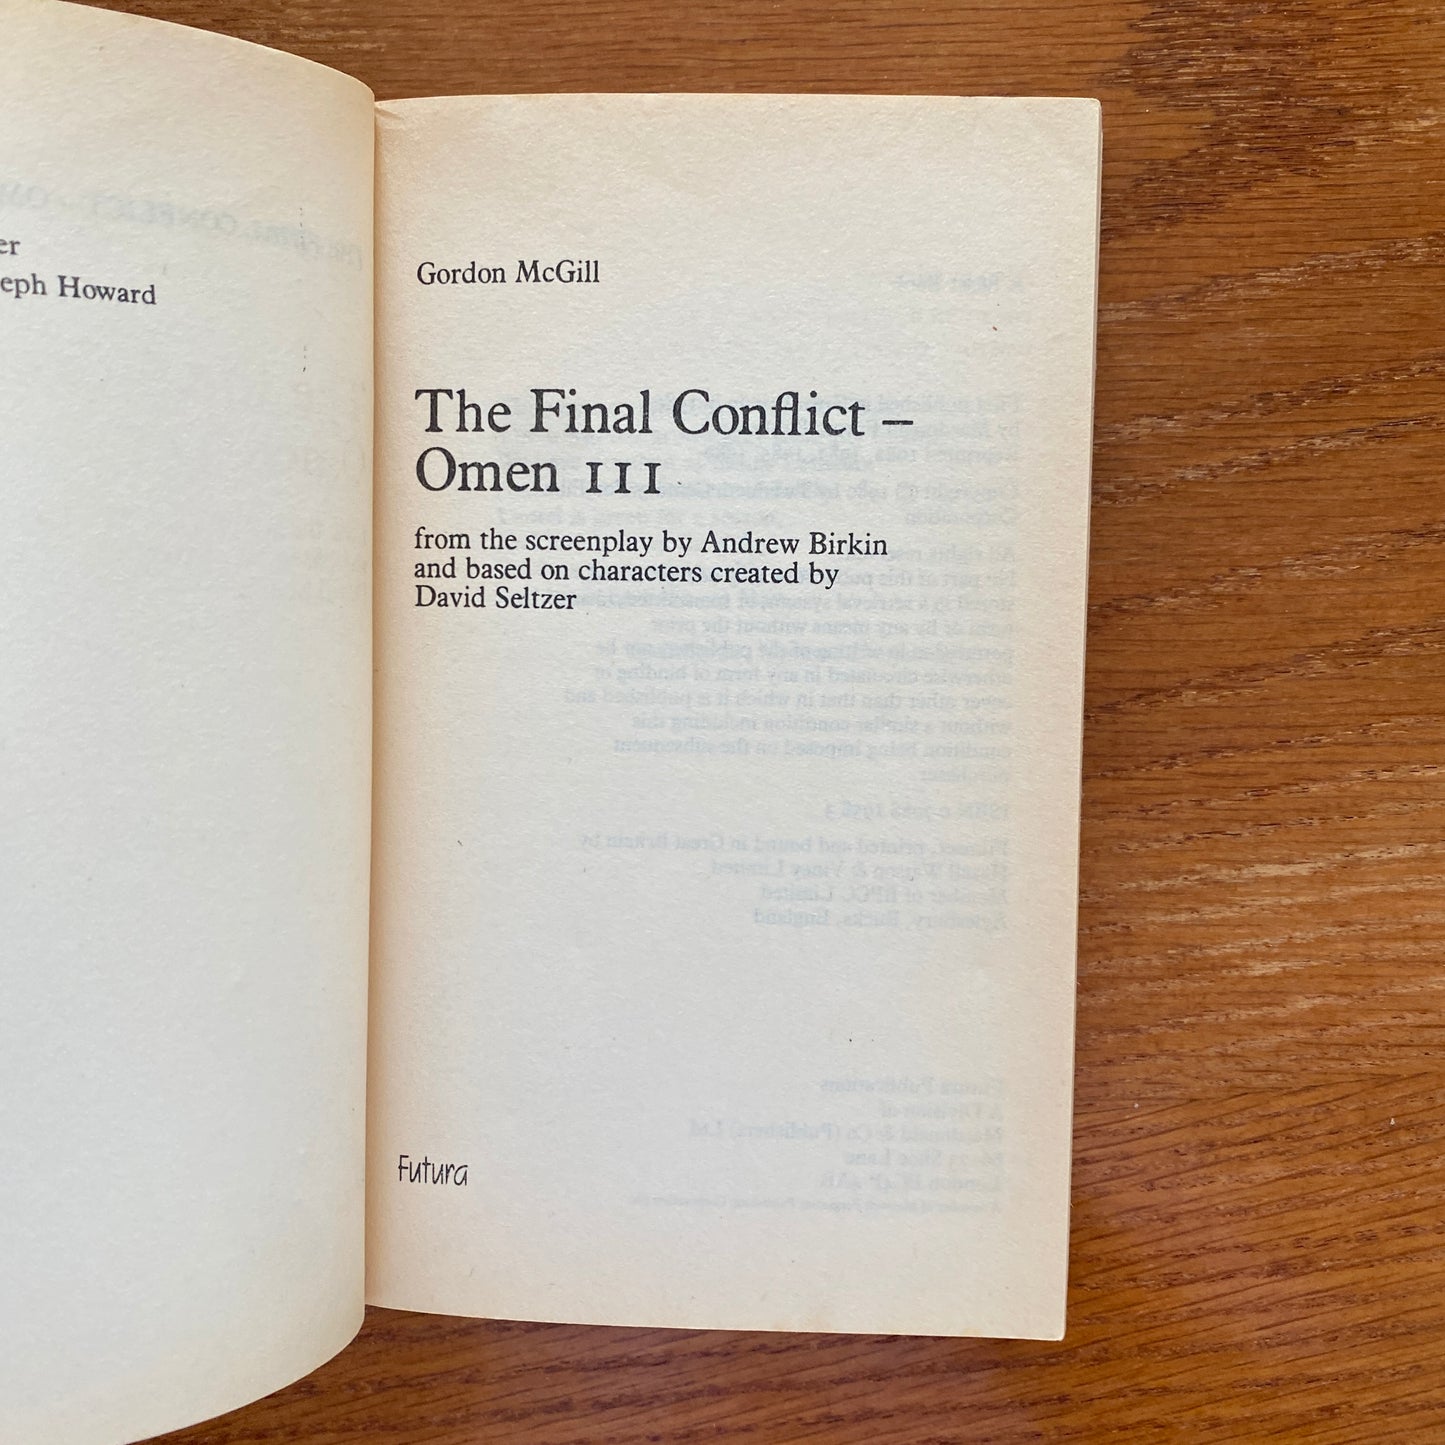 Omen: The Final Conflict - Gordon McGill